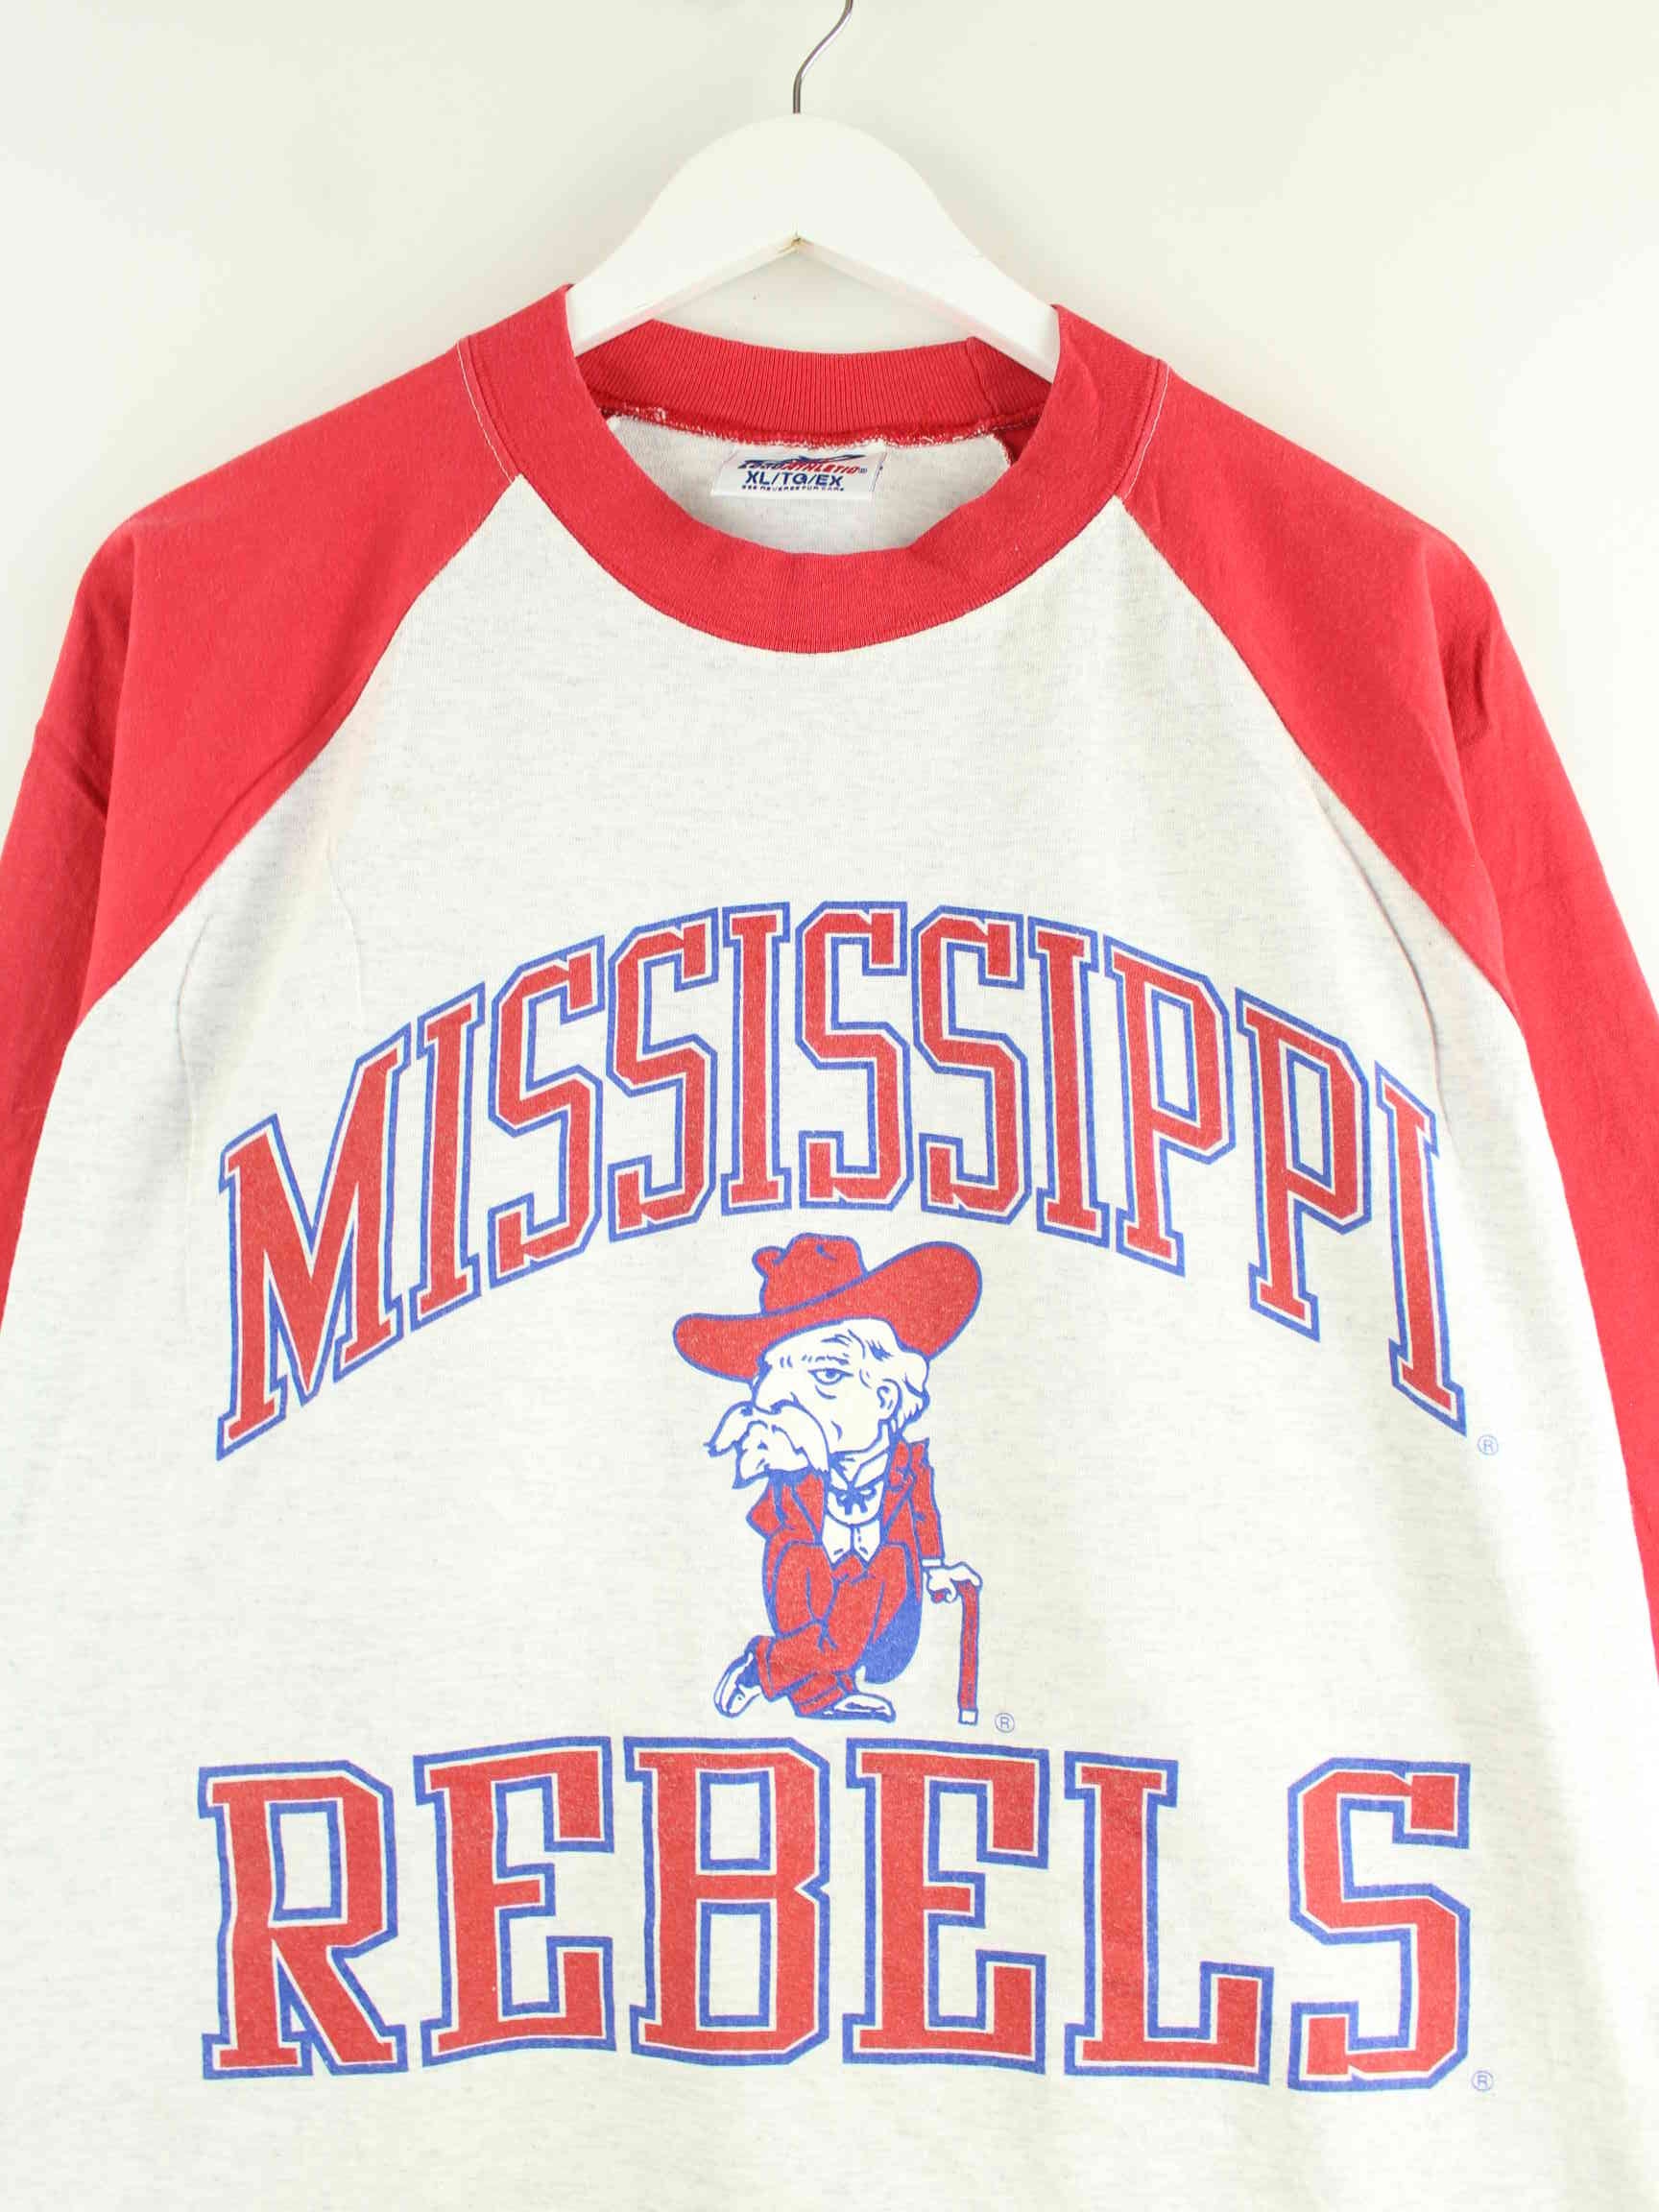 Logo 7 90s Vintage Mississippi Rebbels Print Half Sleeve Sweatshirt Grau XL (detail image 1)